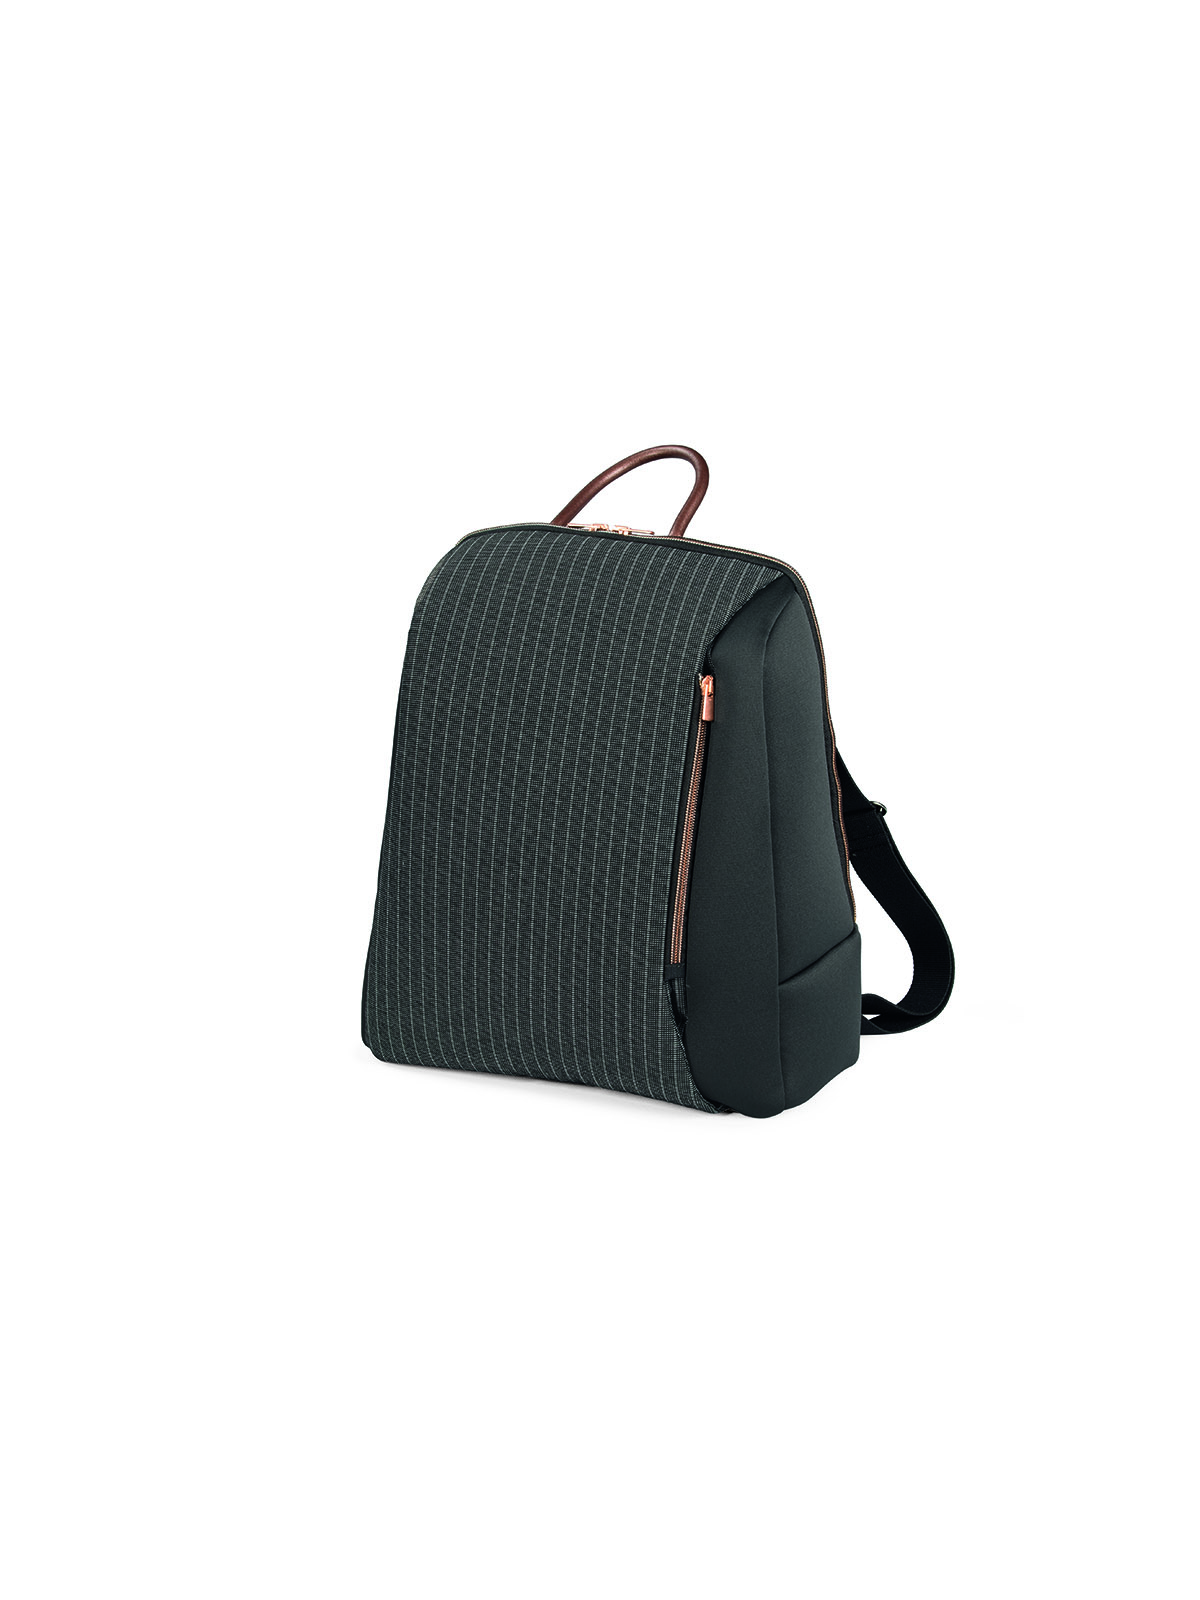 Backpack 500 - Peg perego